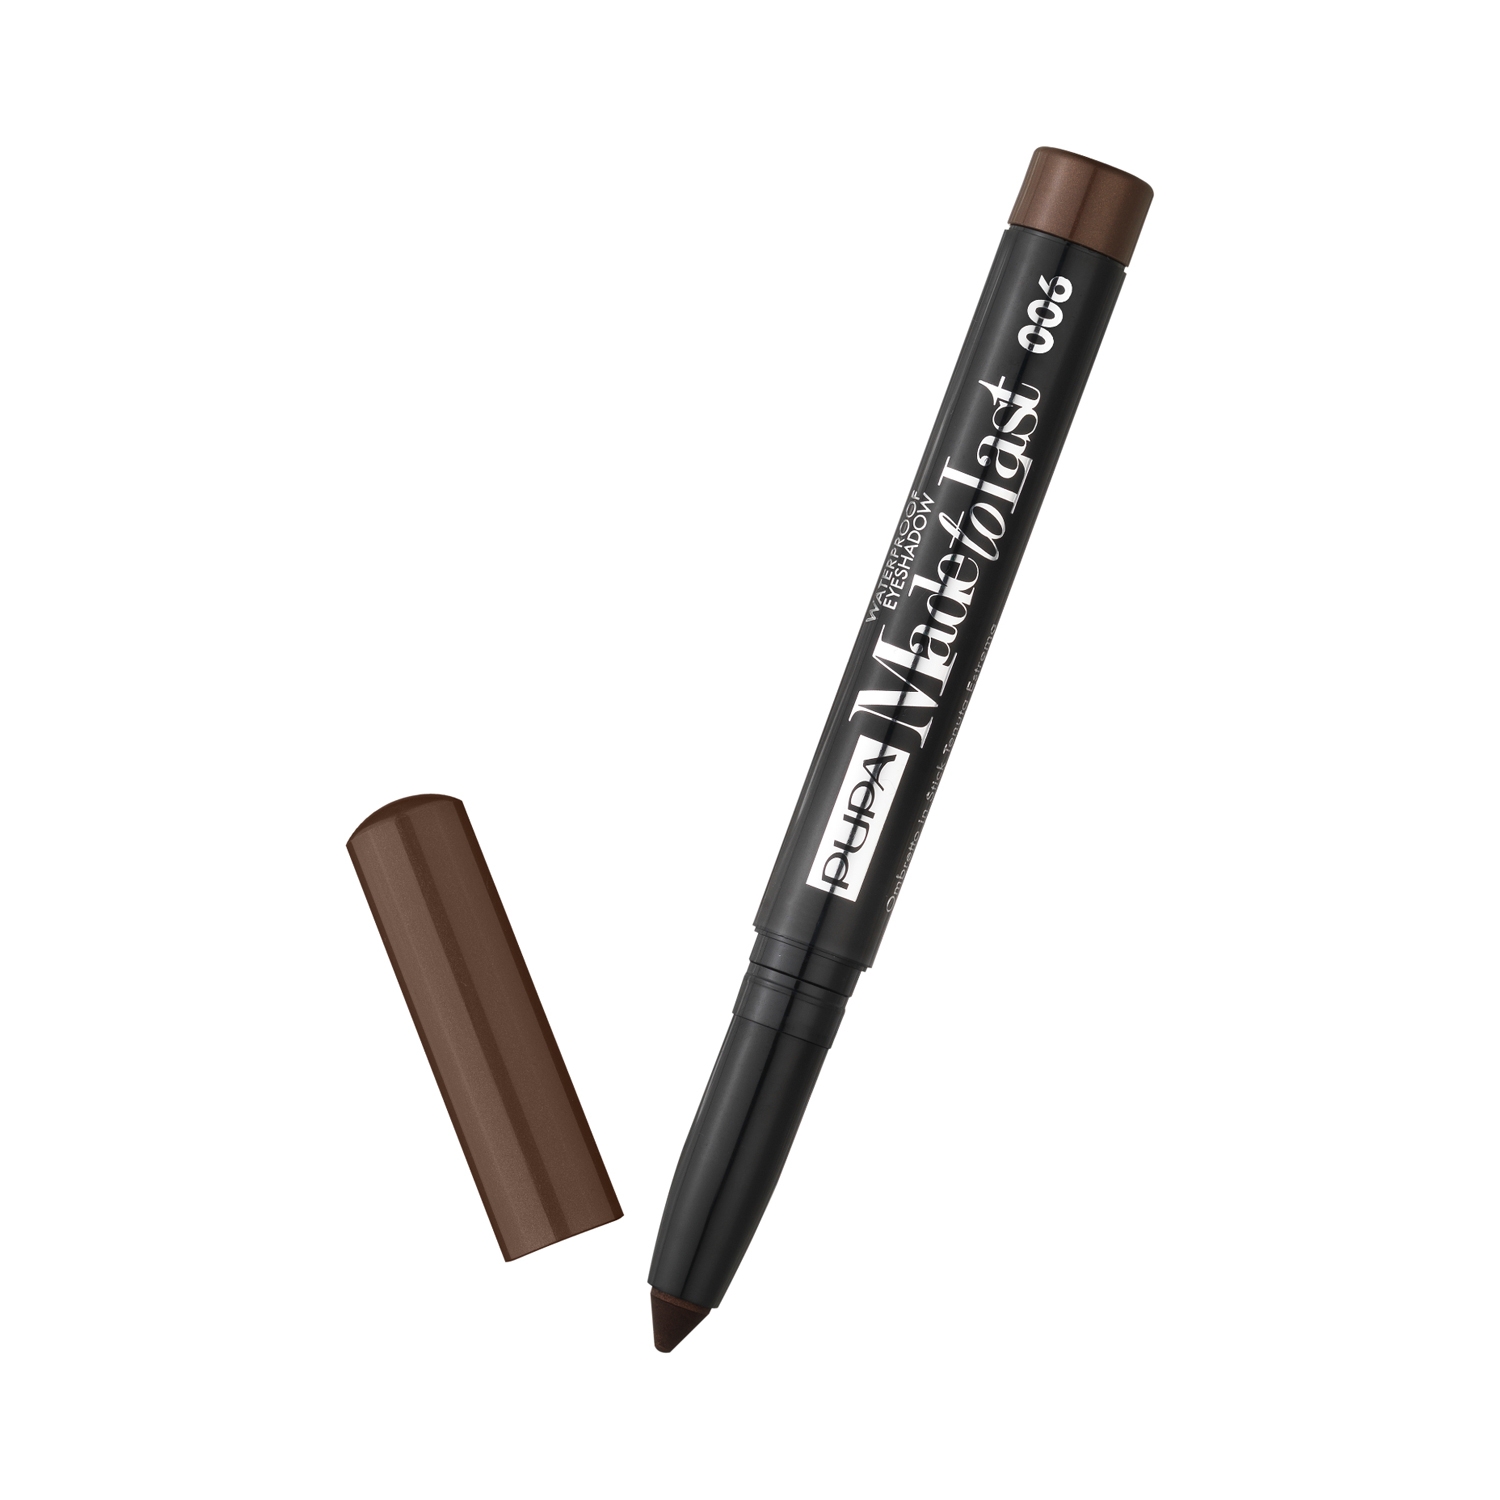 Pupa Milano Made To Last Waterproof Long Lasting Stick Eyeshadow - 006 Bronze Brown (1.4g)